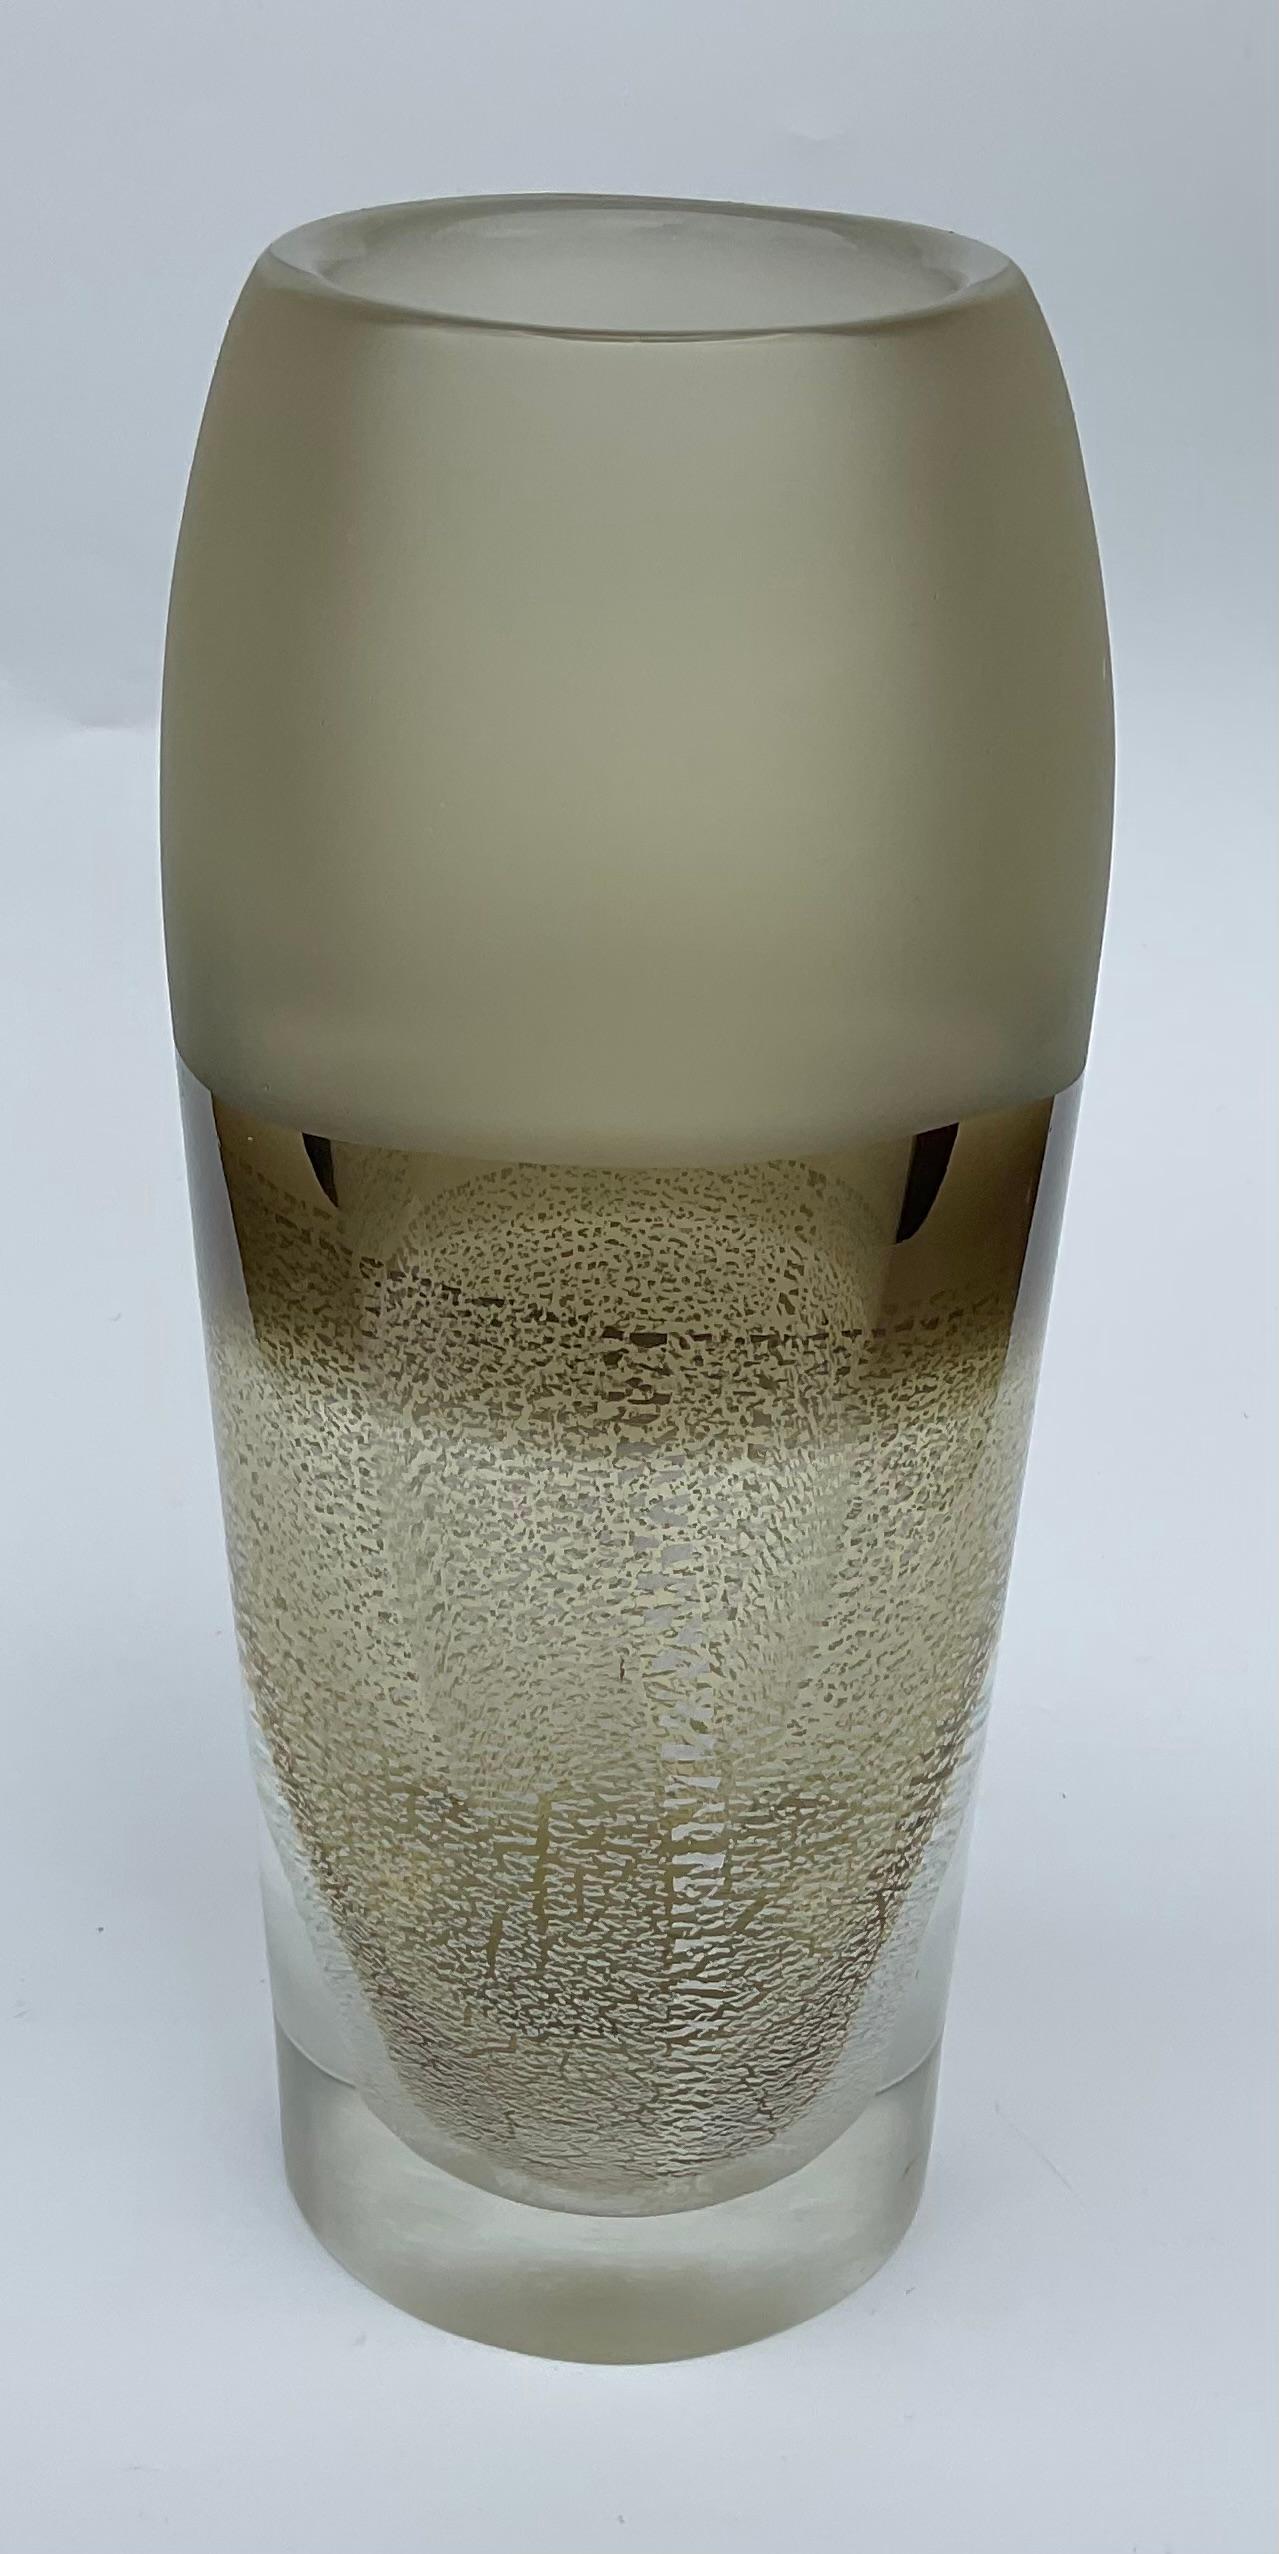 Rodolfo Dordoni Murano Venini Glass Vase ARGENTATI Series Signed and Dated 2003. Retains its original Venini label. 